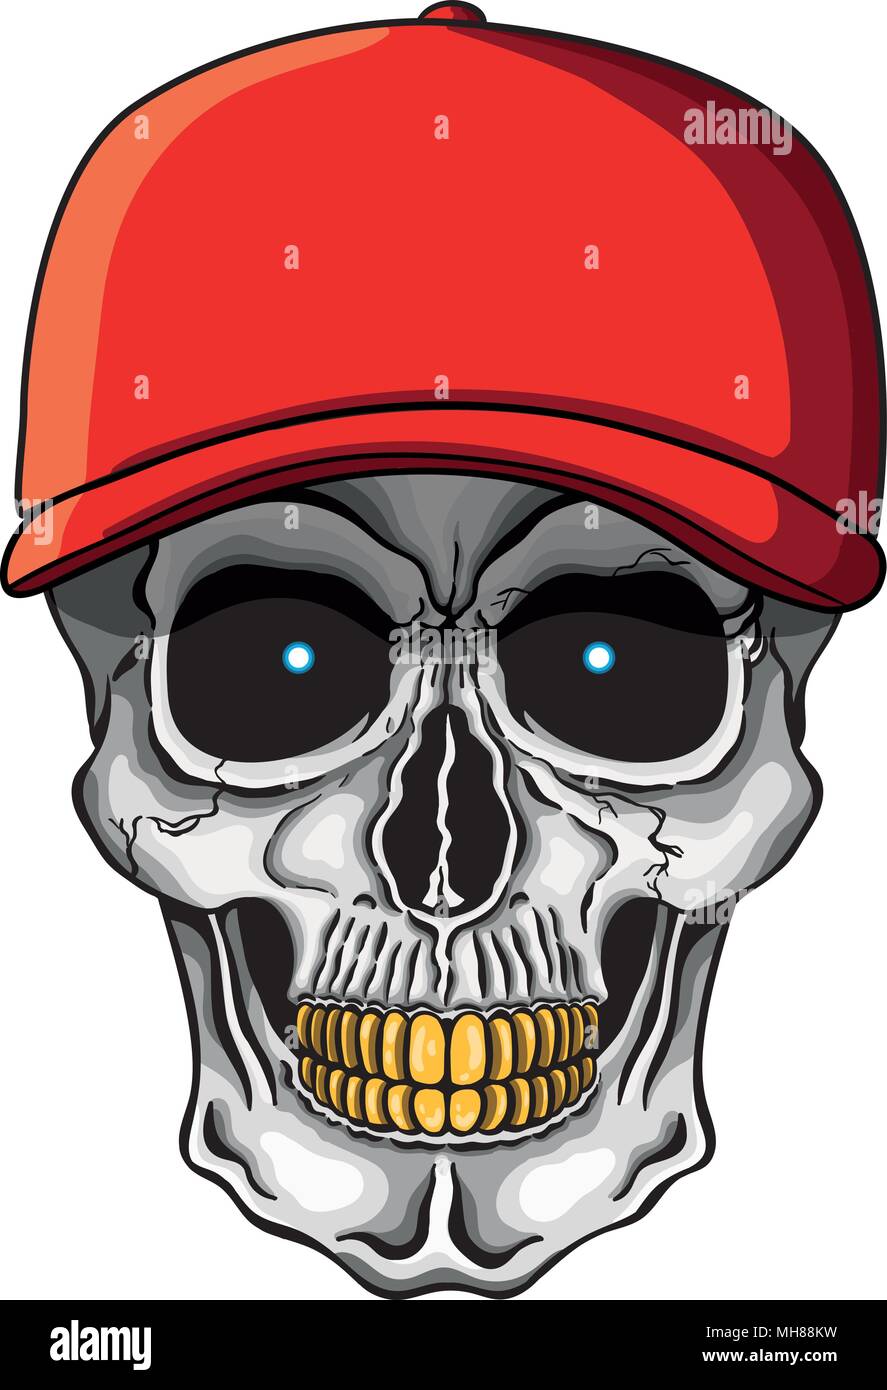 Vector illustration of human skull with golden teeth and baseball cap. Stock Vector